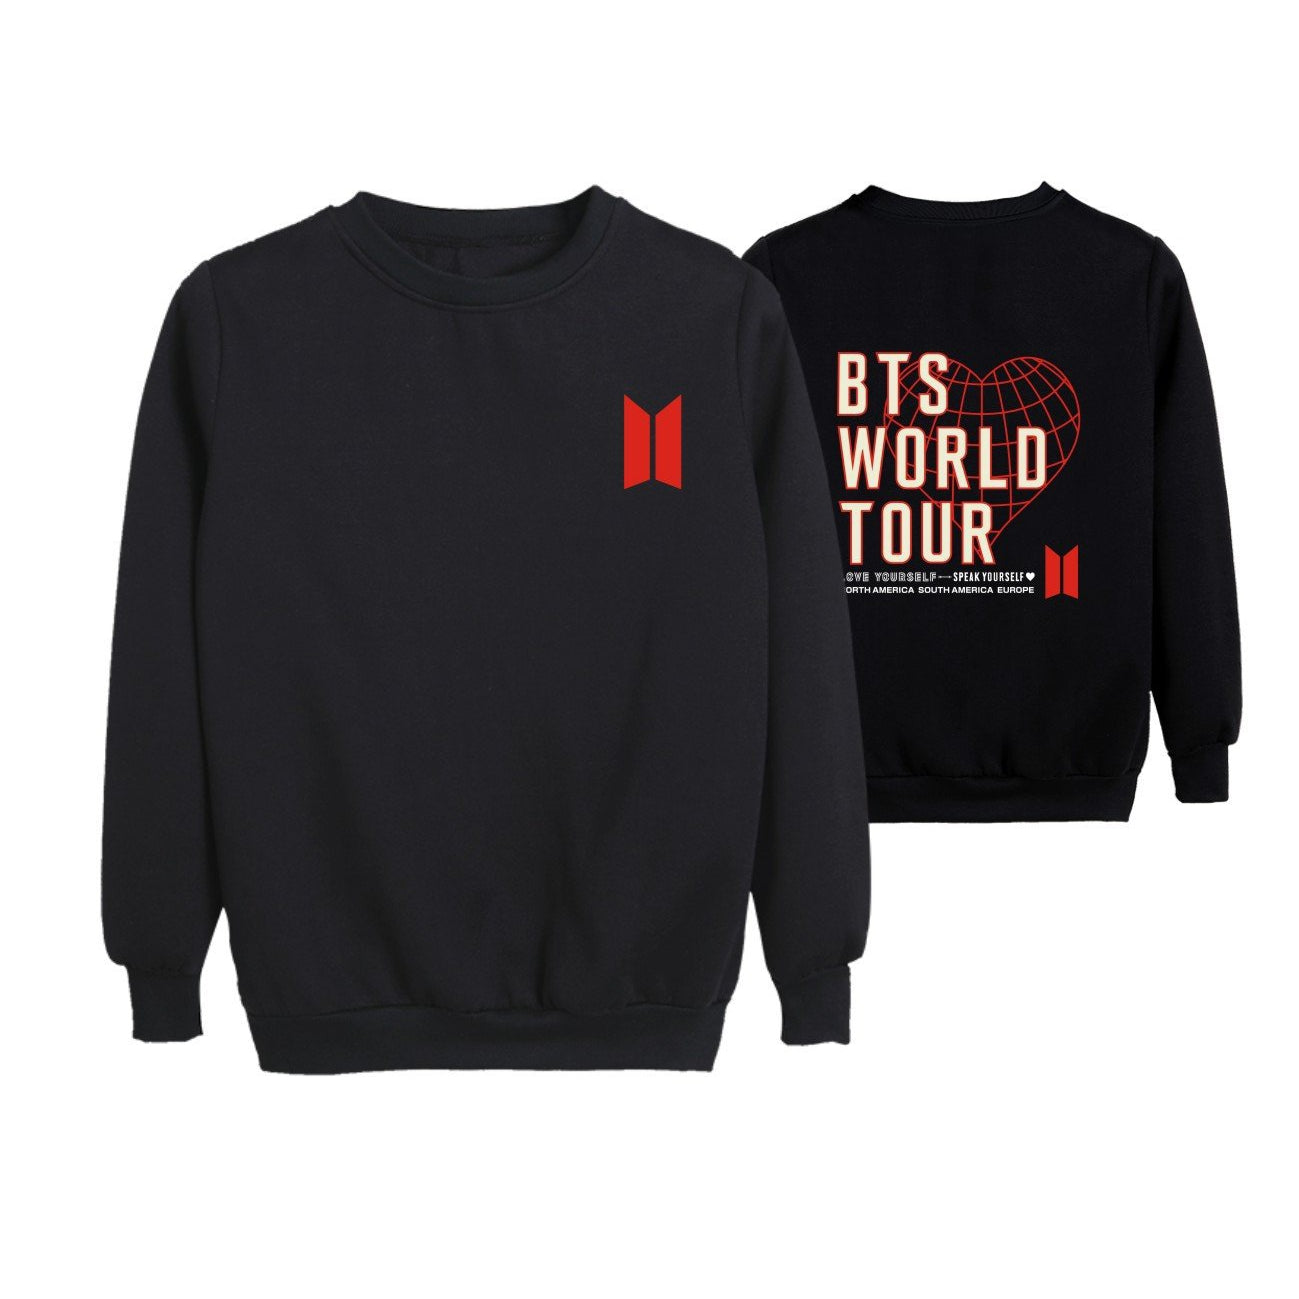 “Bts World Tour” Sweater